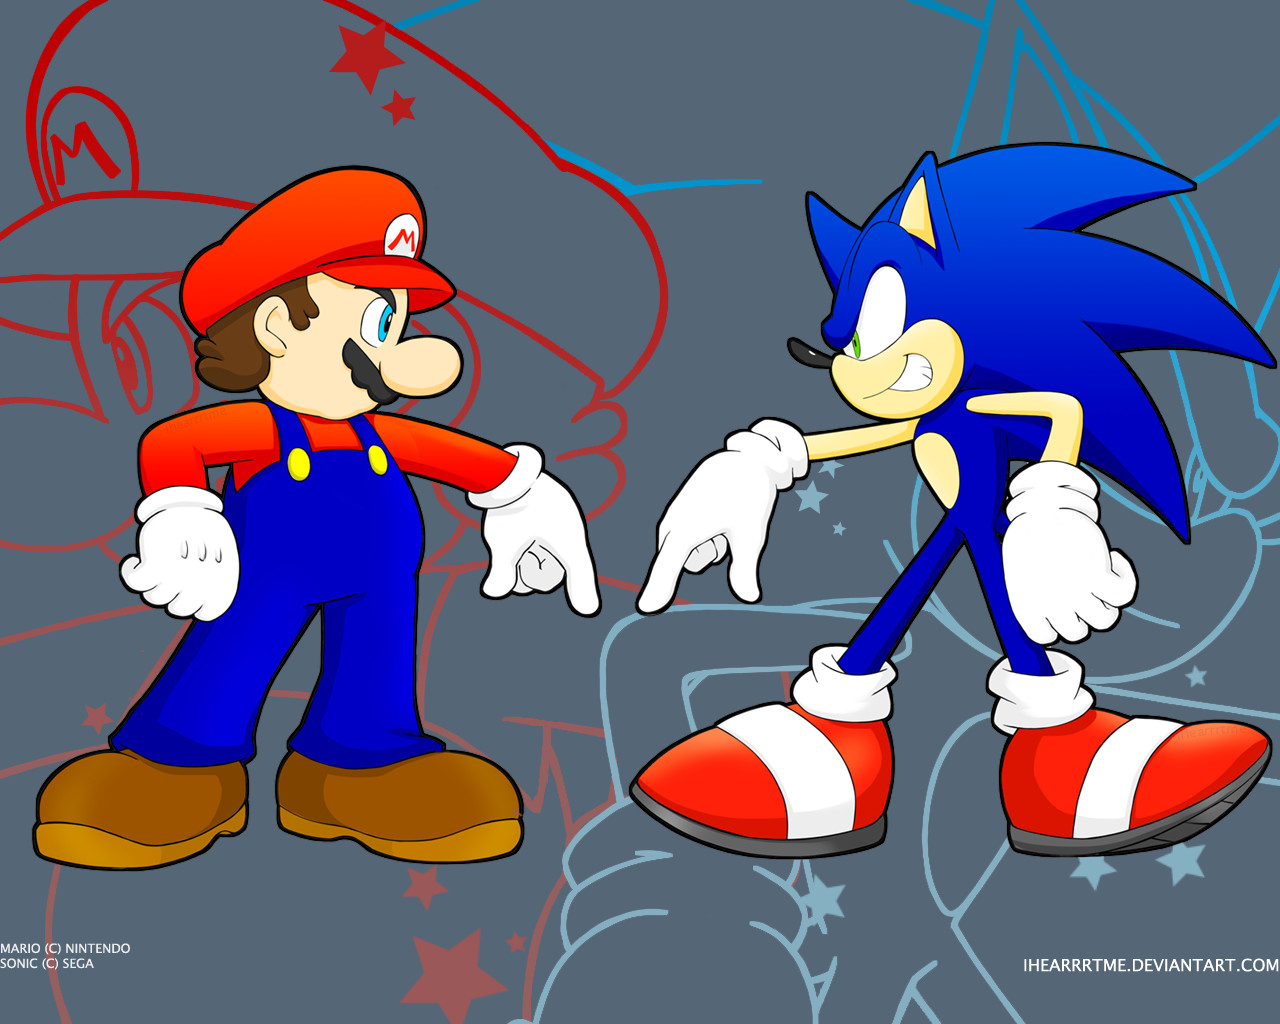 Who Wins Mario vs Sonic wallpaper by ChosenMii on DeviantArt